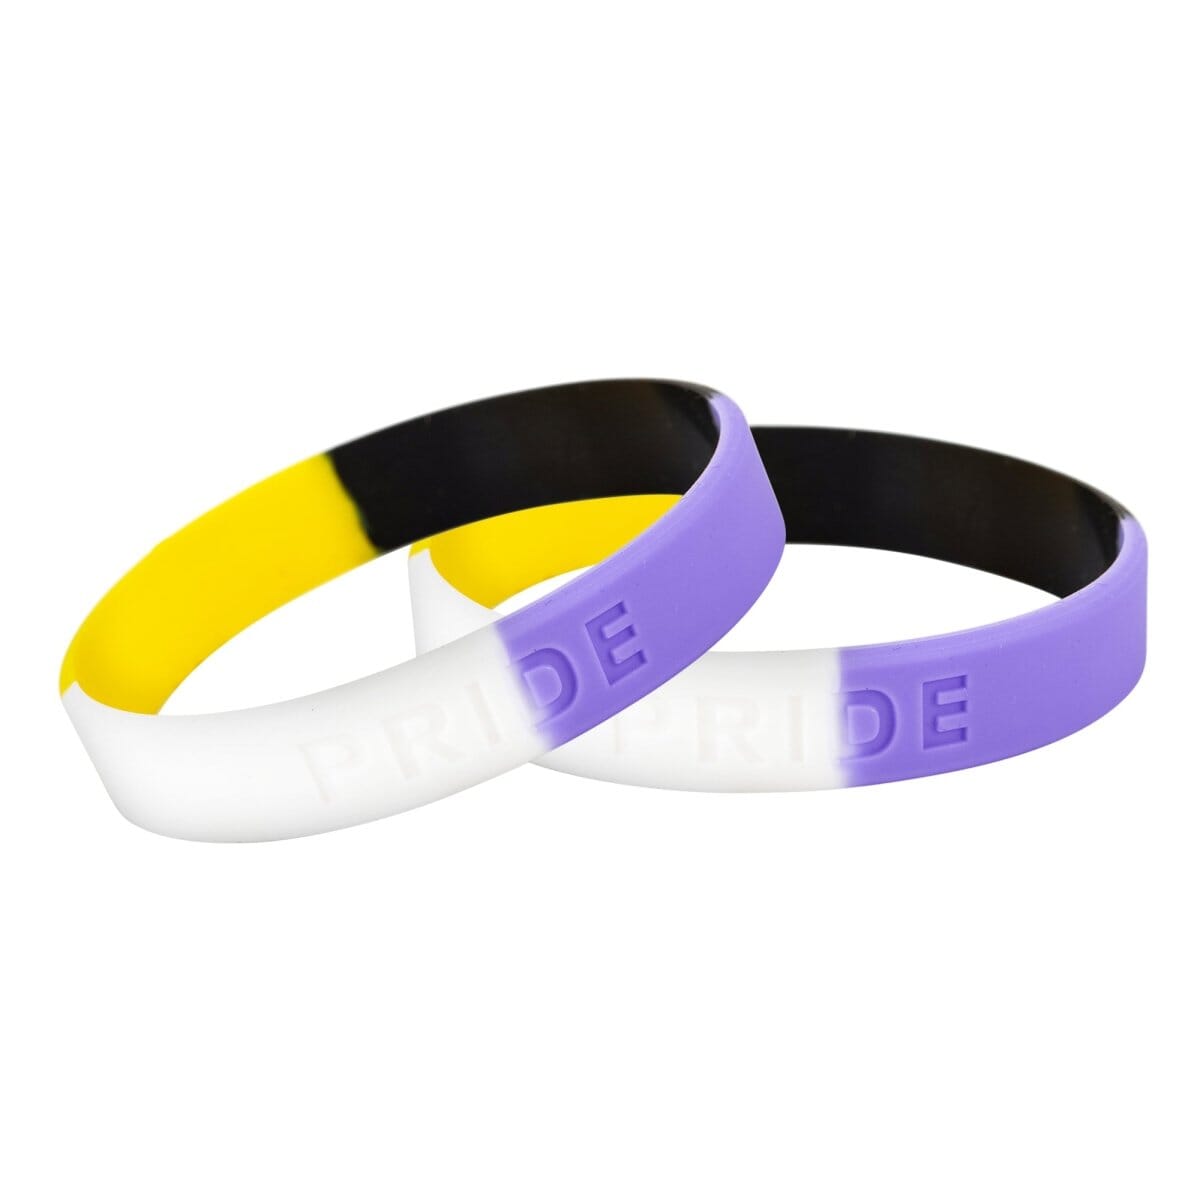 Bulk Nonbinary Silicone Bracelets - Vibrant LGBTQ Pride Accessory Packs at Wholesale Prices